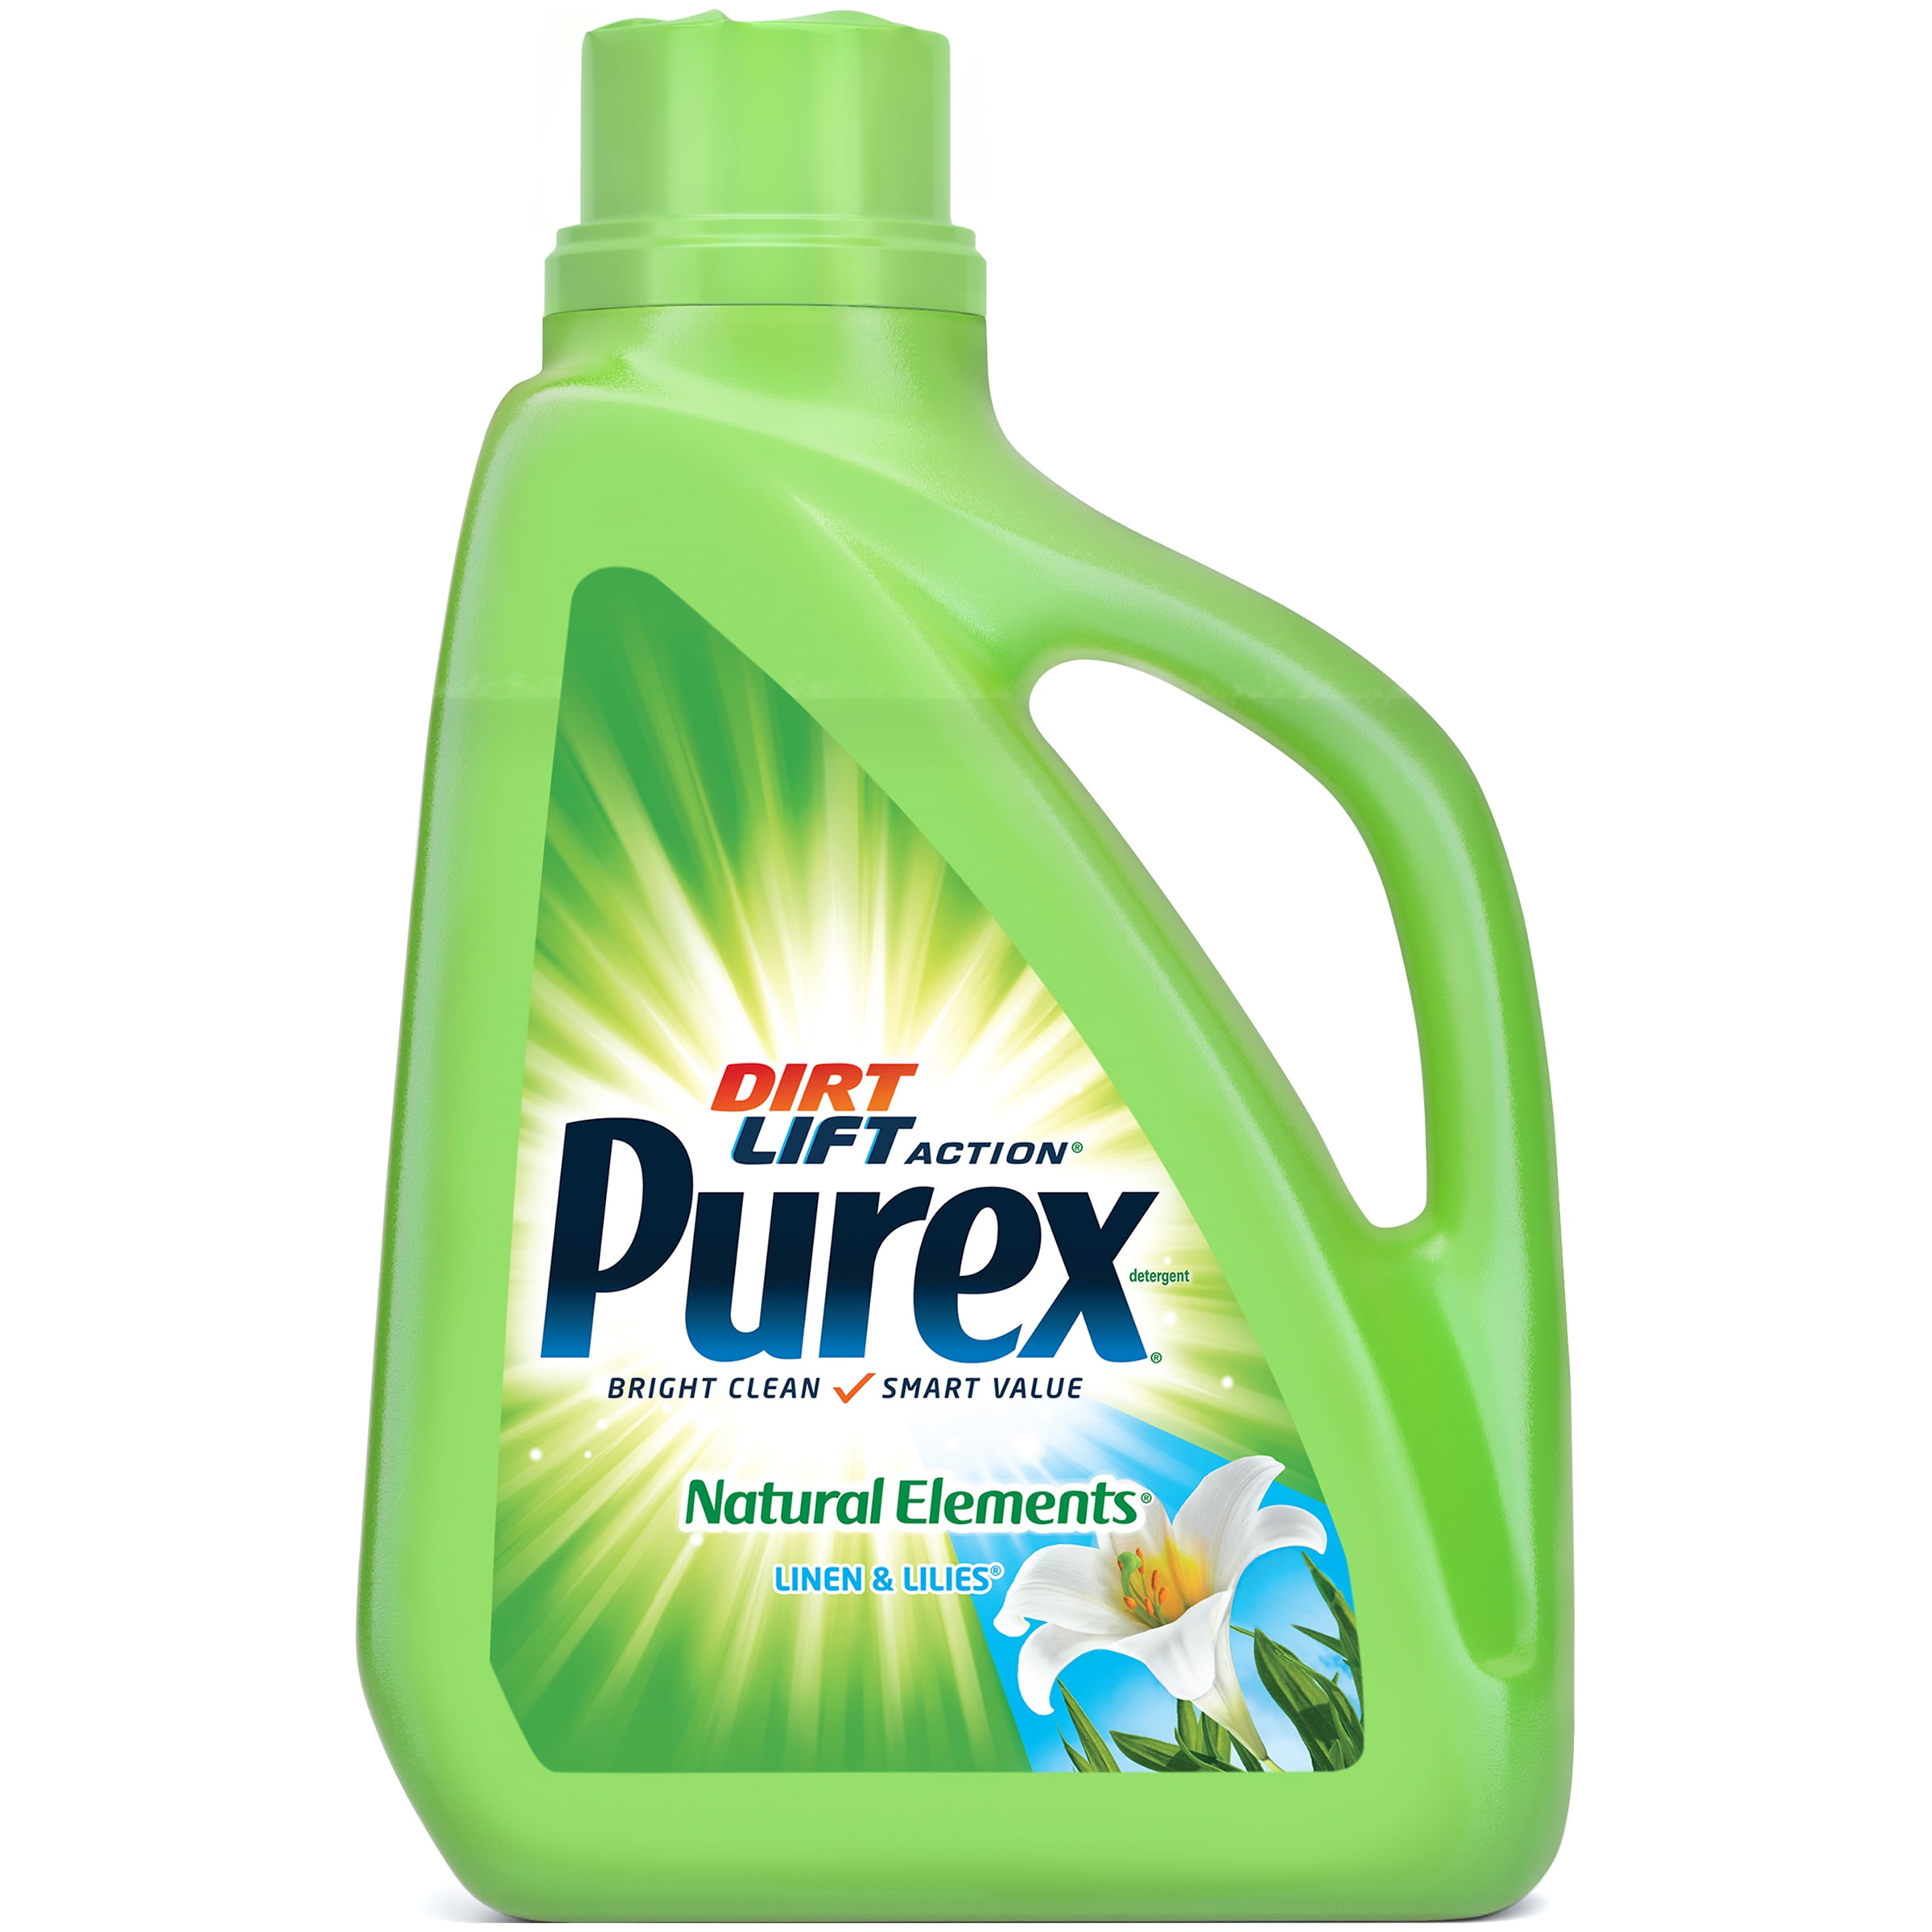 Purex Liquid Laundry Detergent, Natural